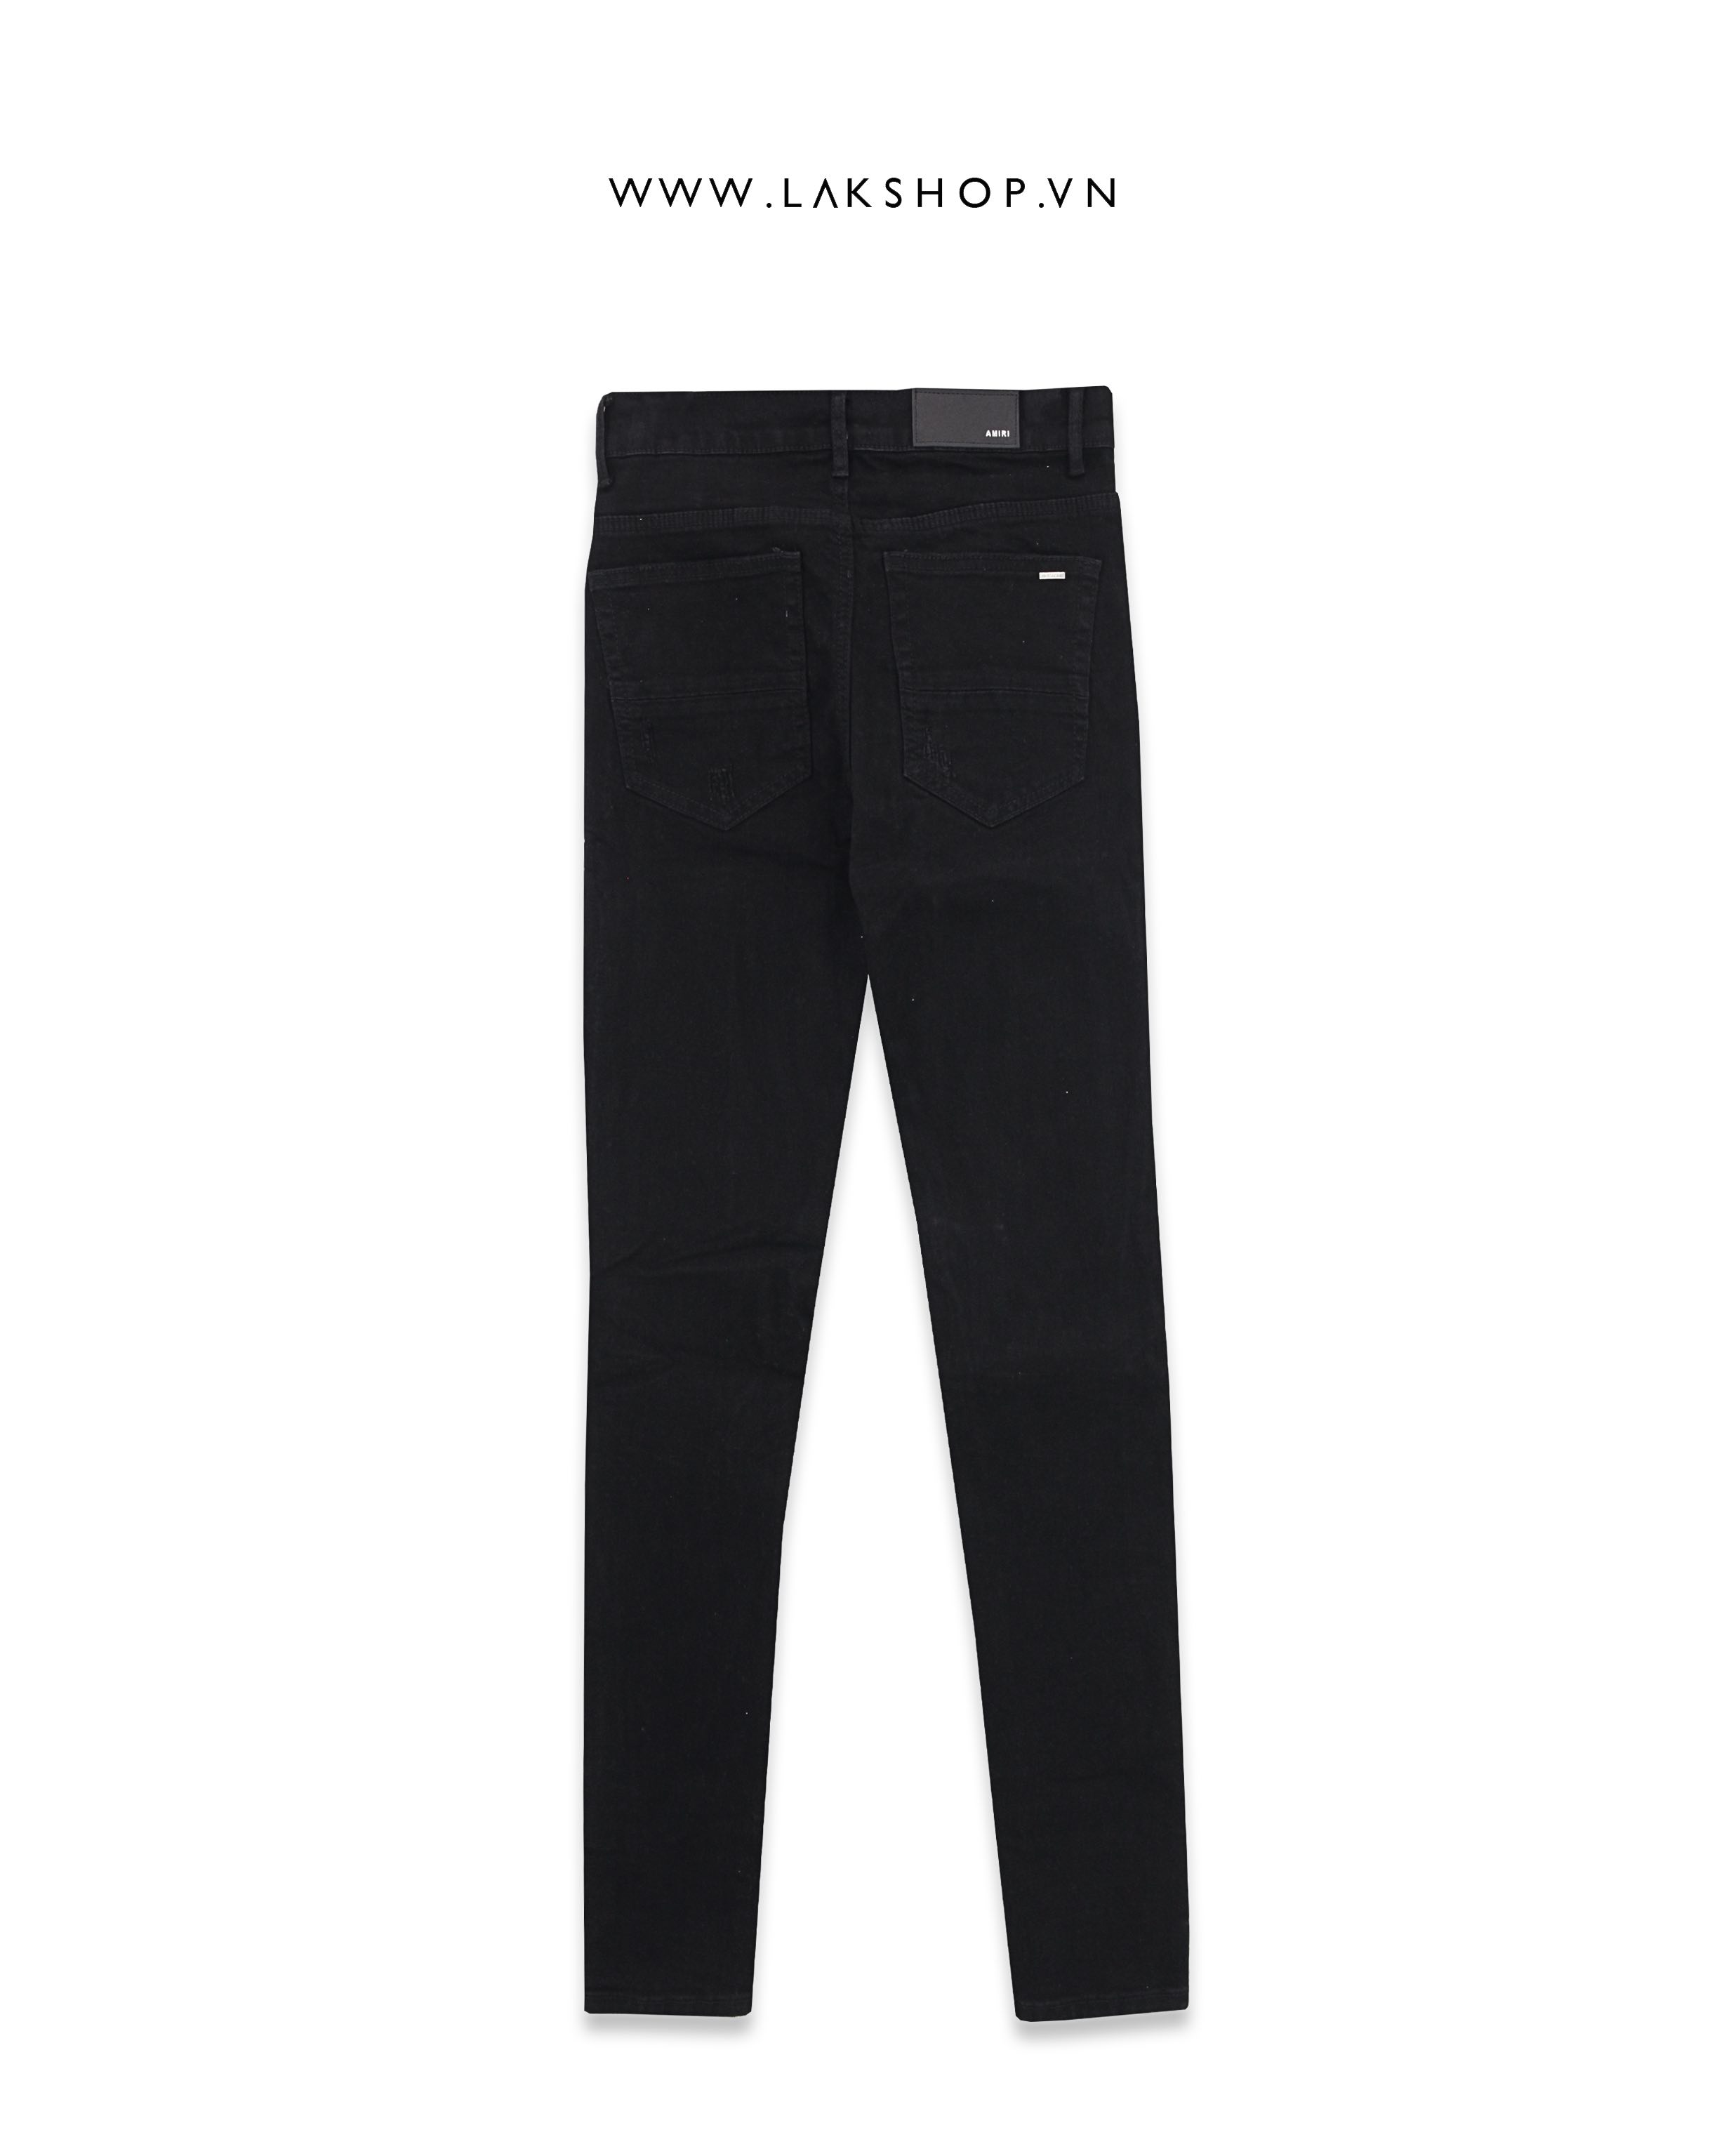 Amjrj Black Cystal Stripe Skinny Jeans